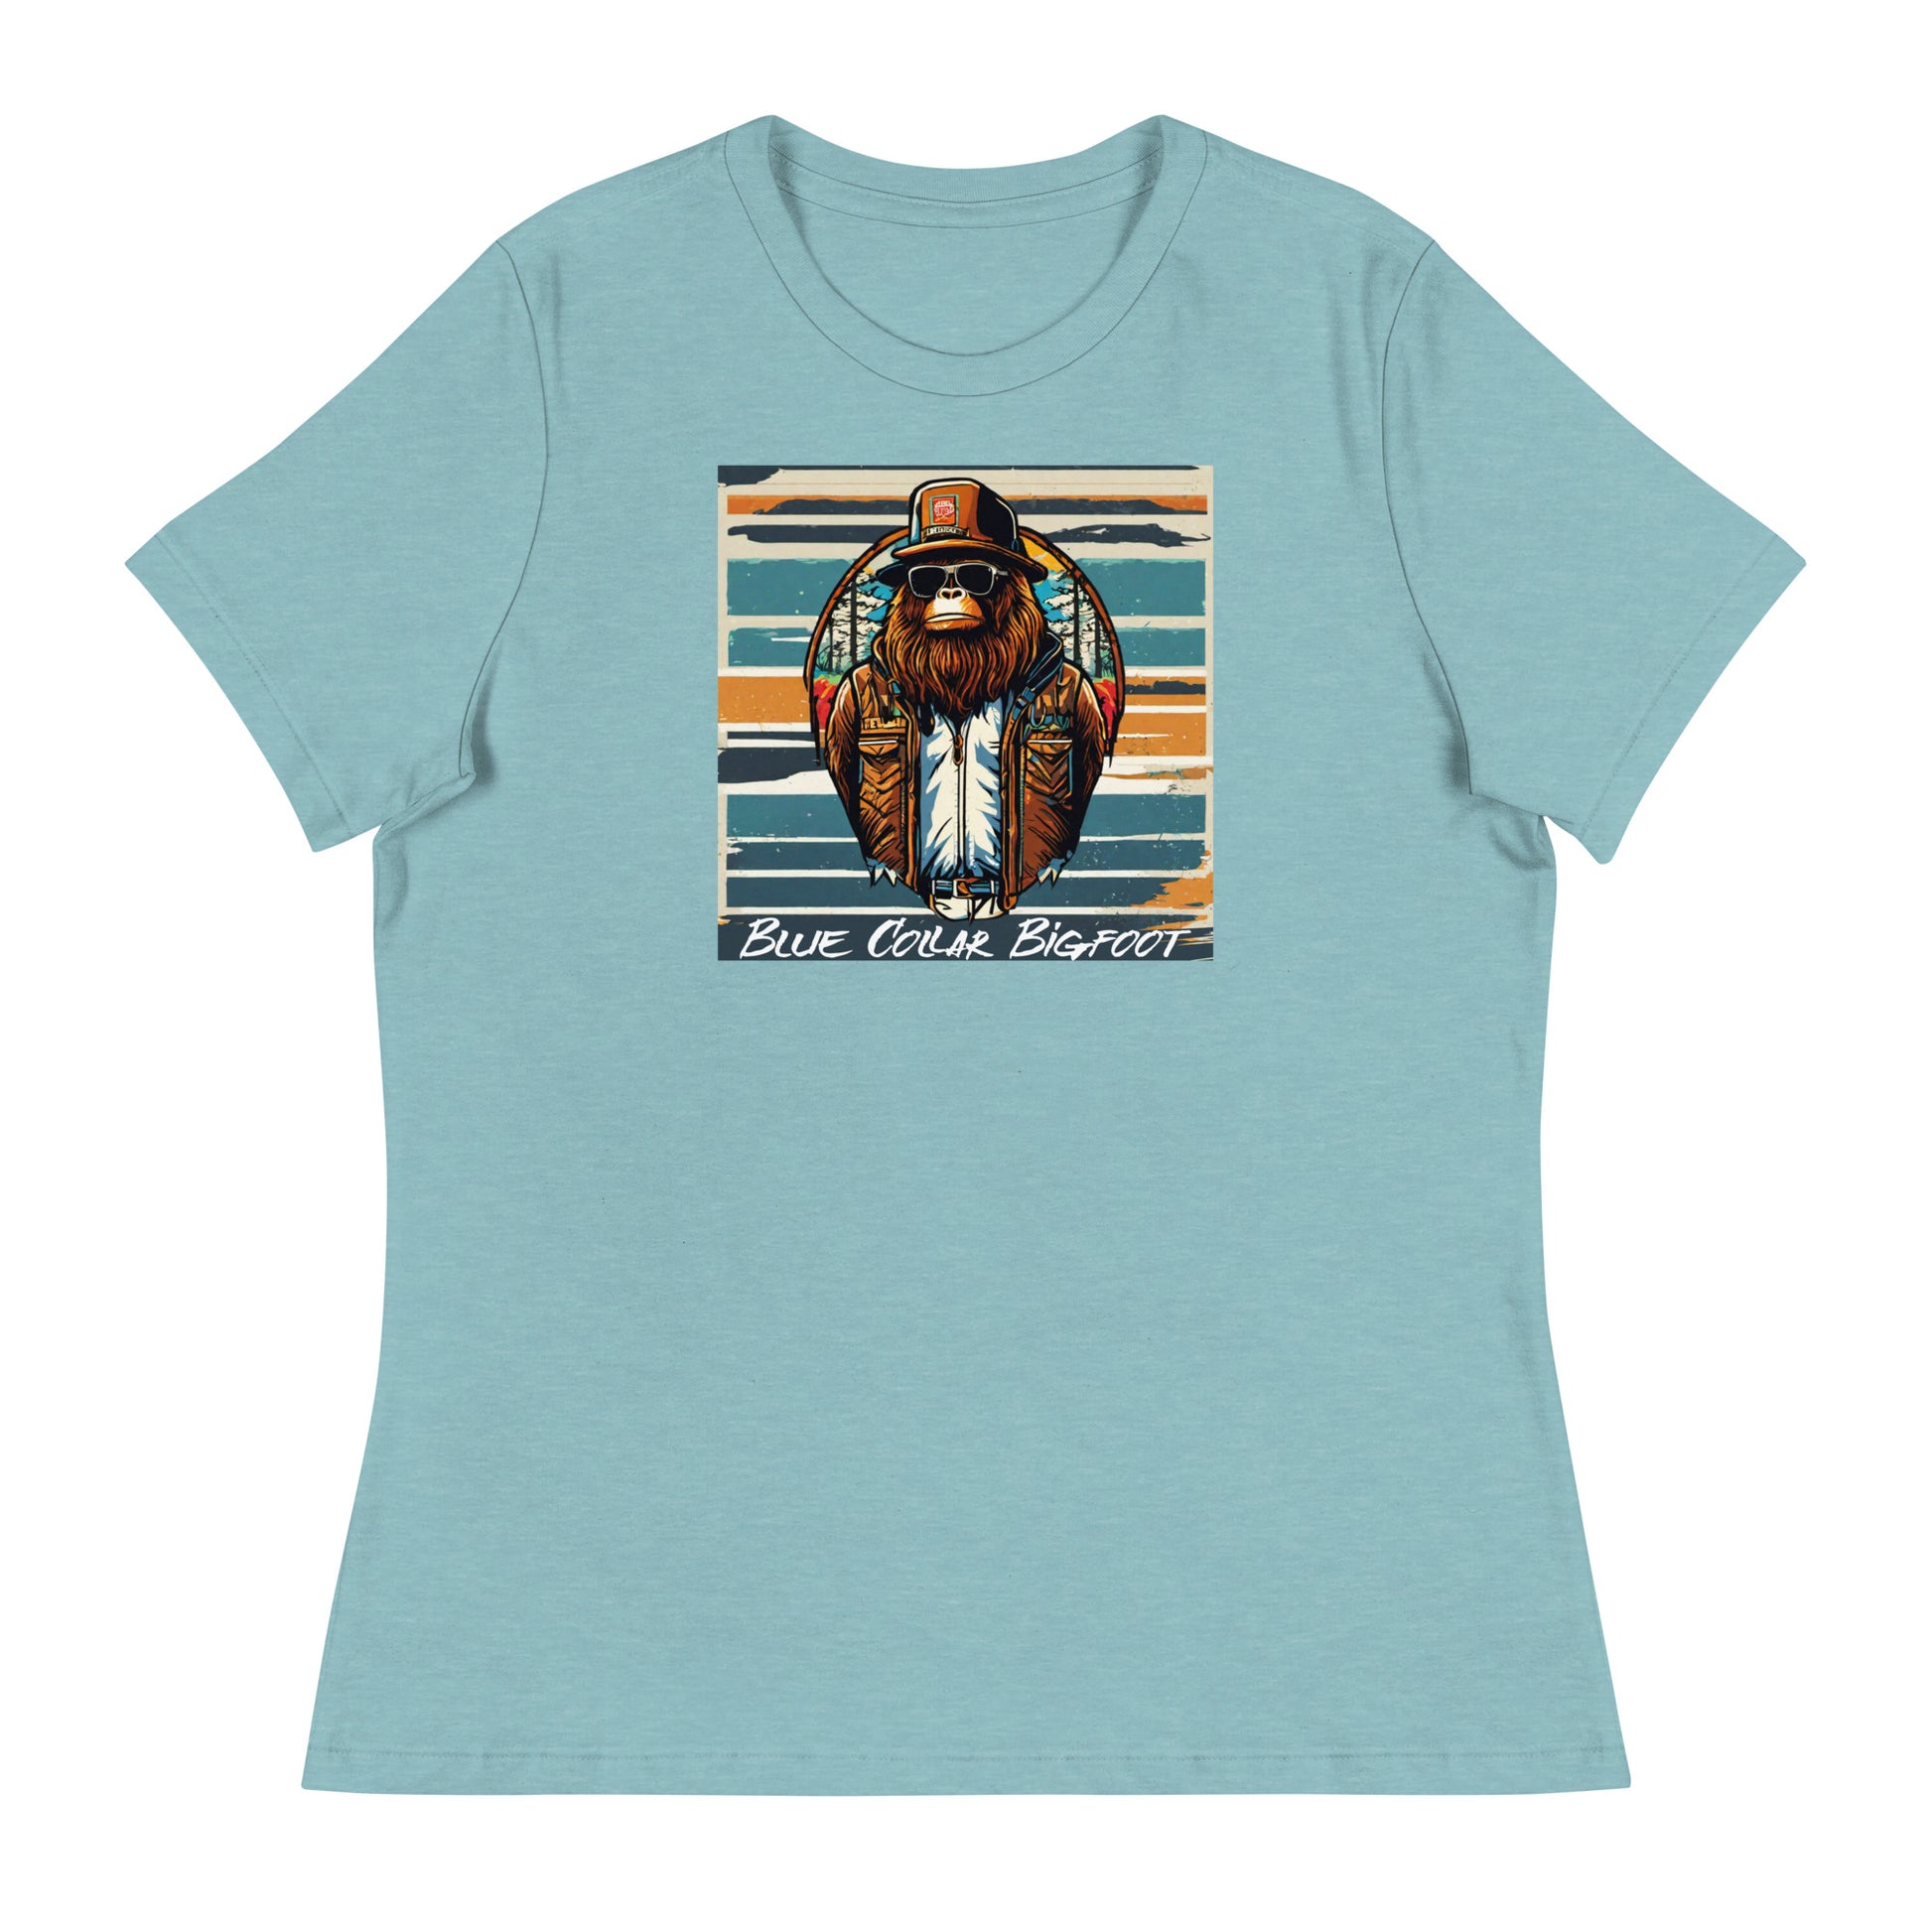 Blue-Collar Bigfoot Women's Graphic T-Shirt Heather Blue Lagoon